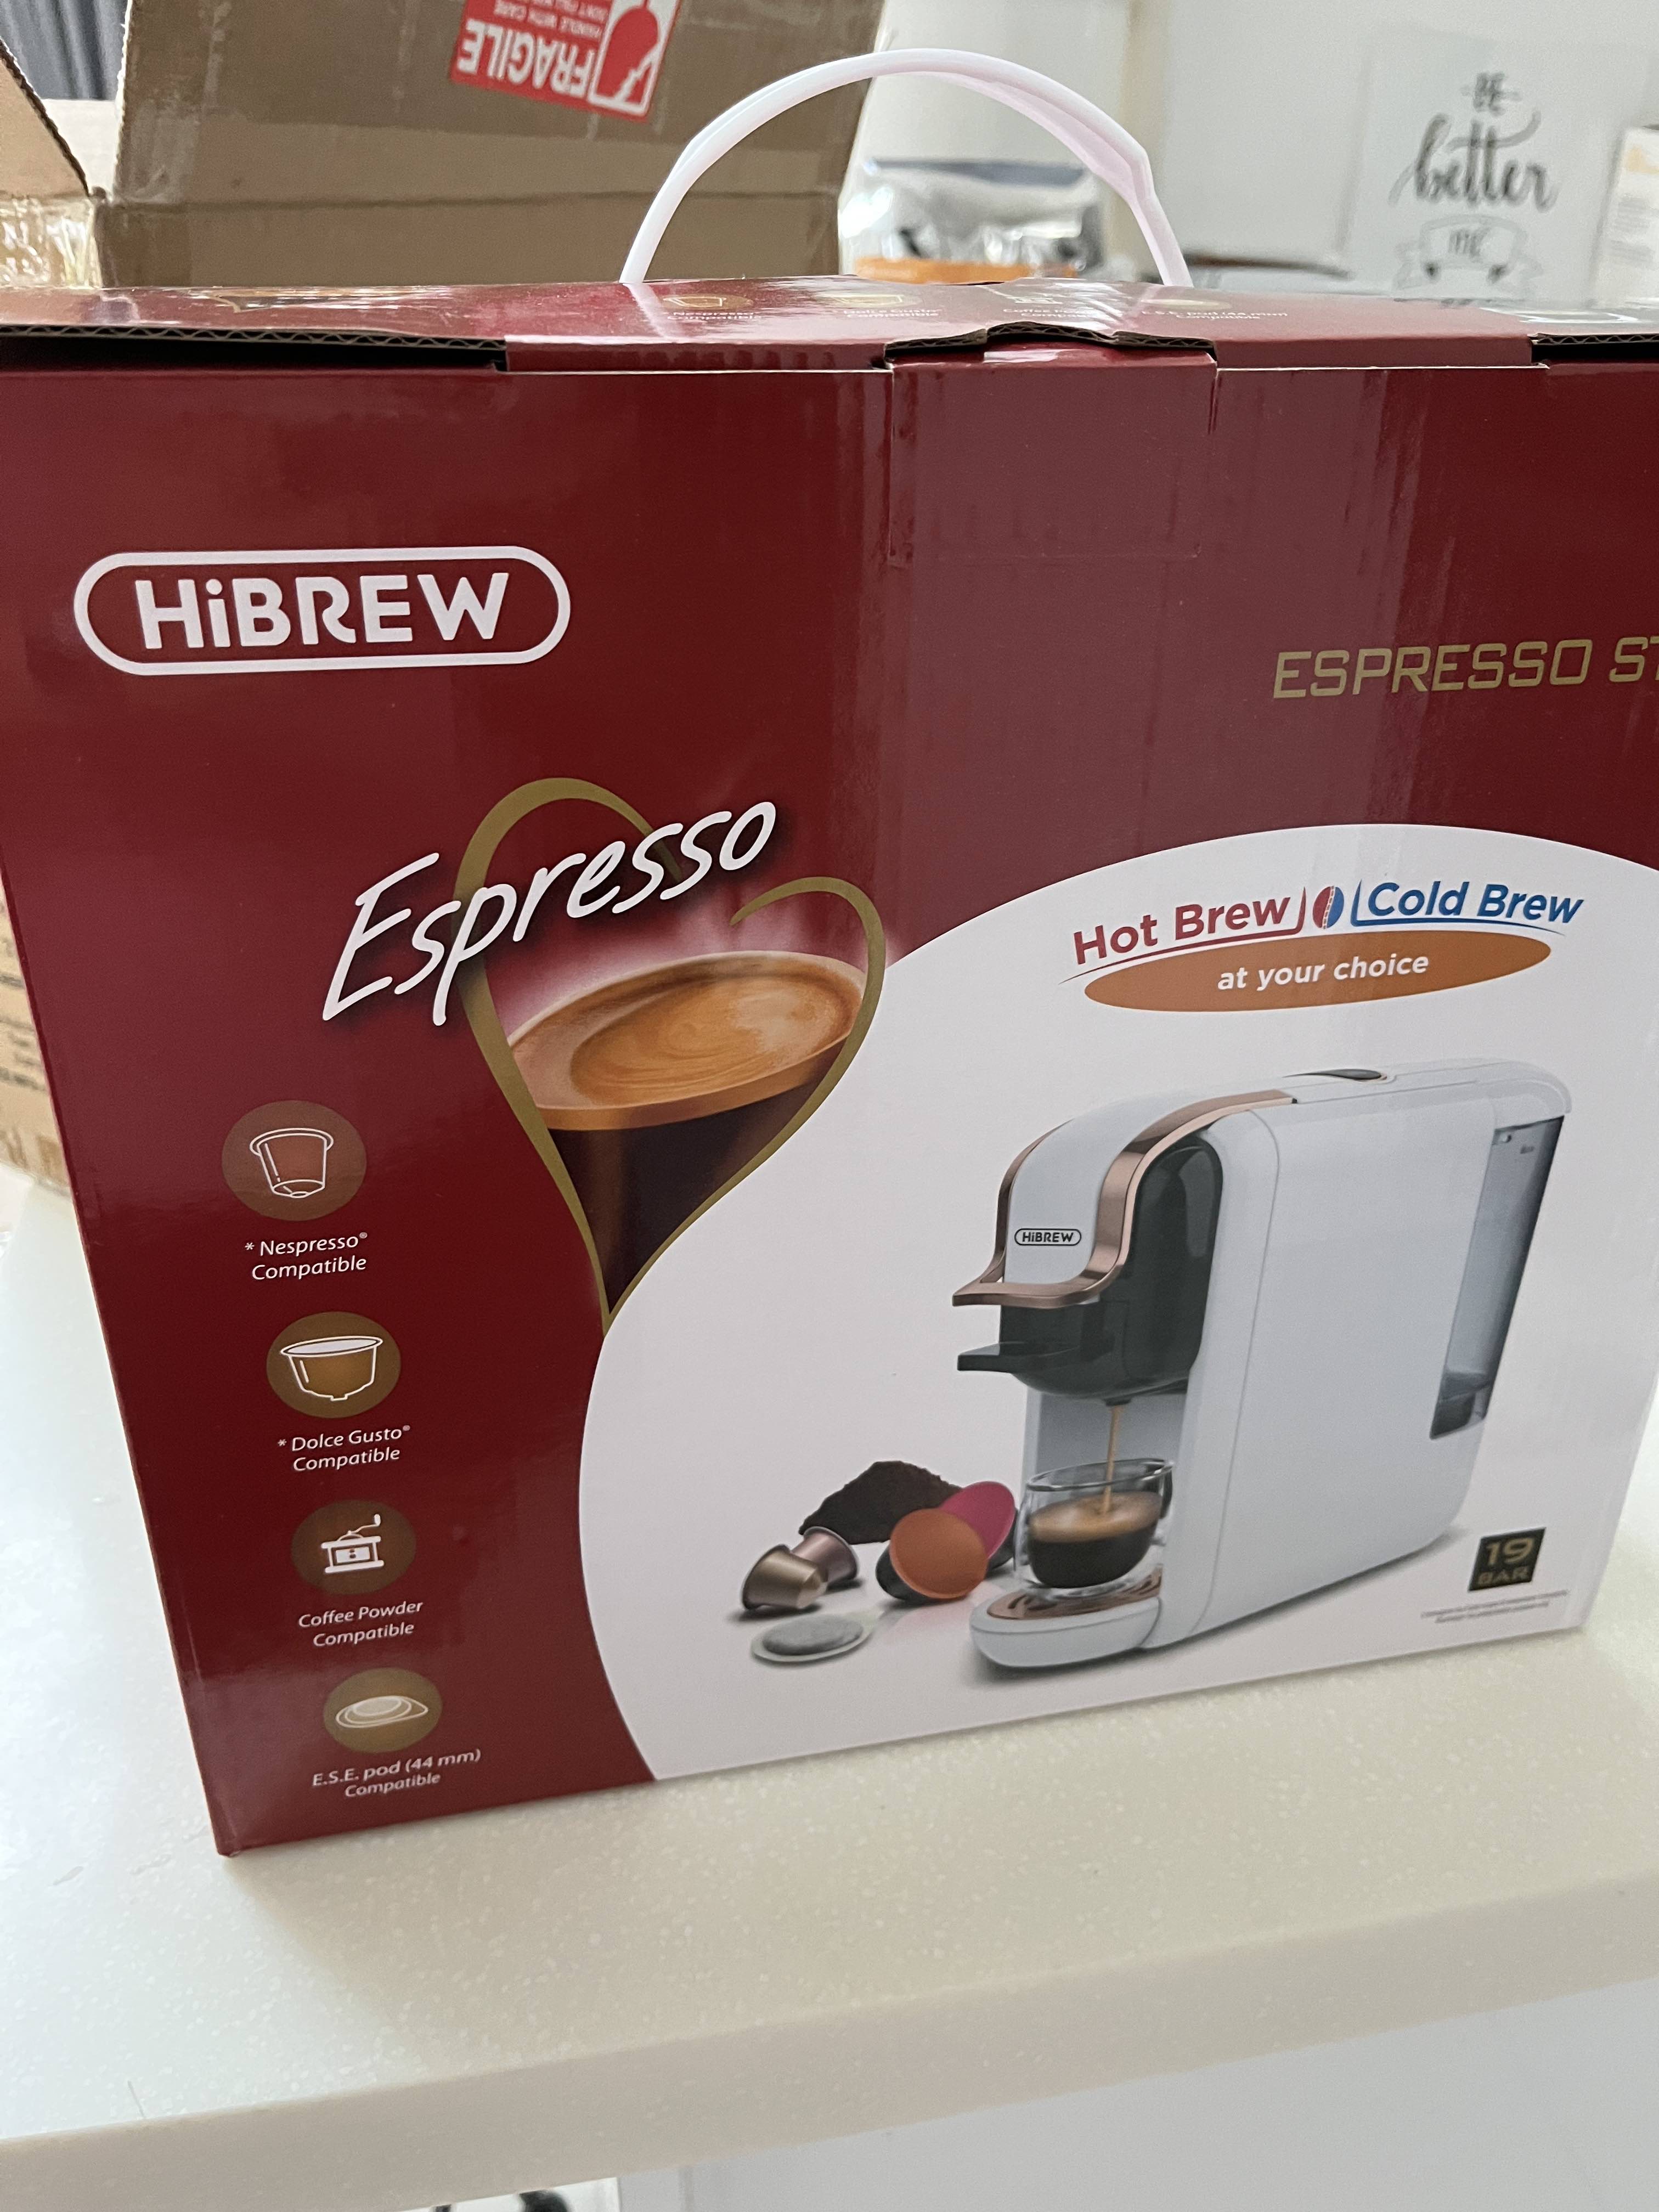 4in1 Multiple Capsule Expresso Coffee Machine For Dolce Gusto Milk Capsule  Nespresso Ground Coffee Compatible - AliExpress